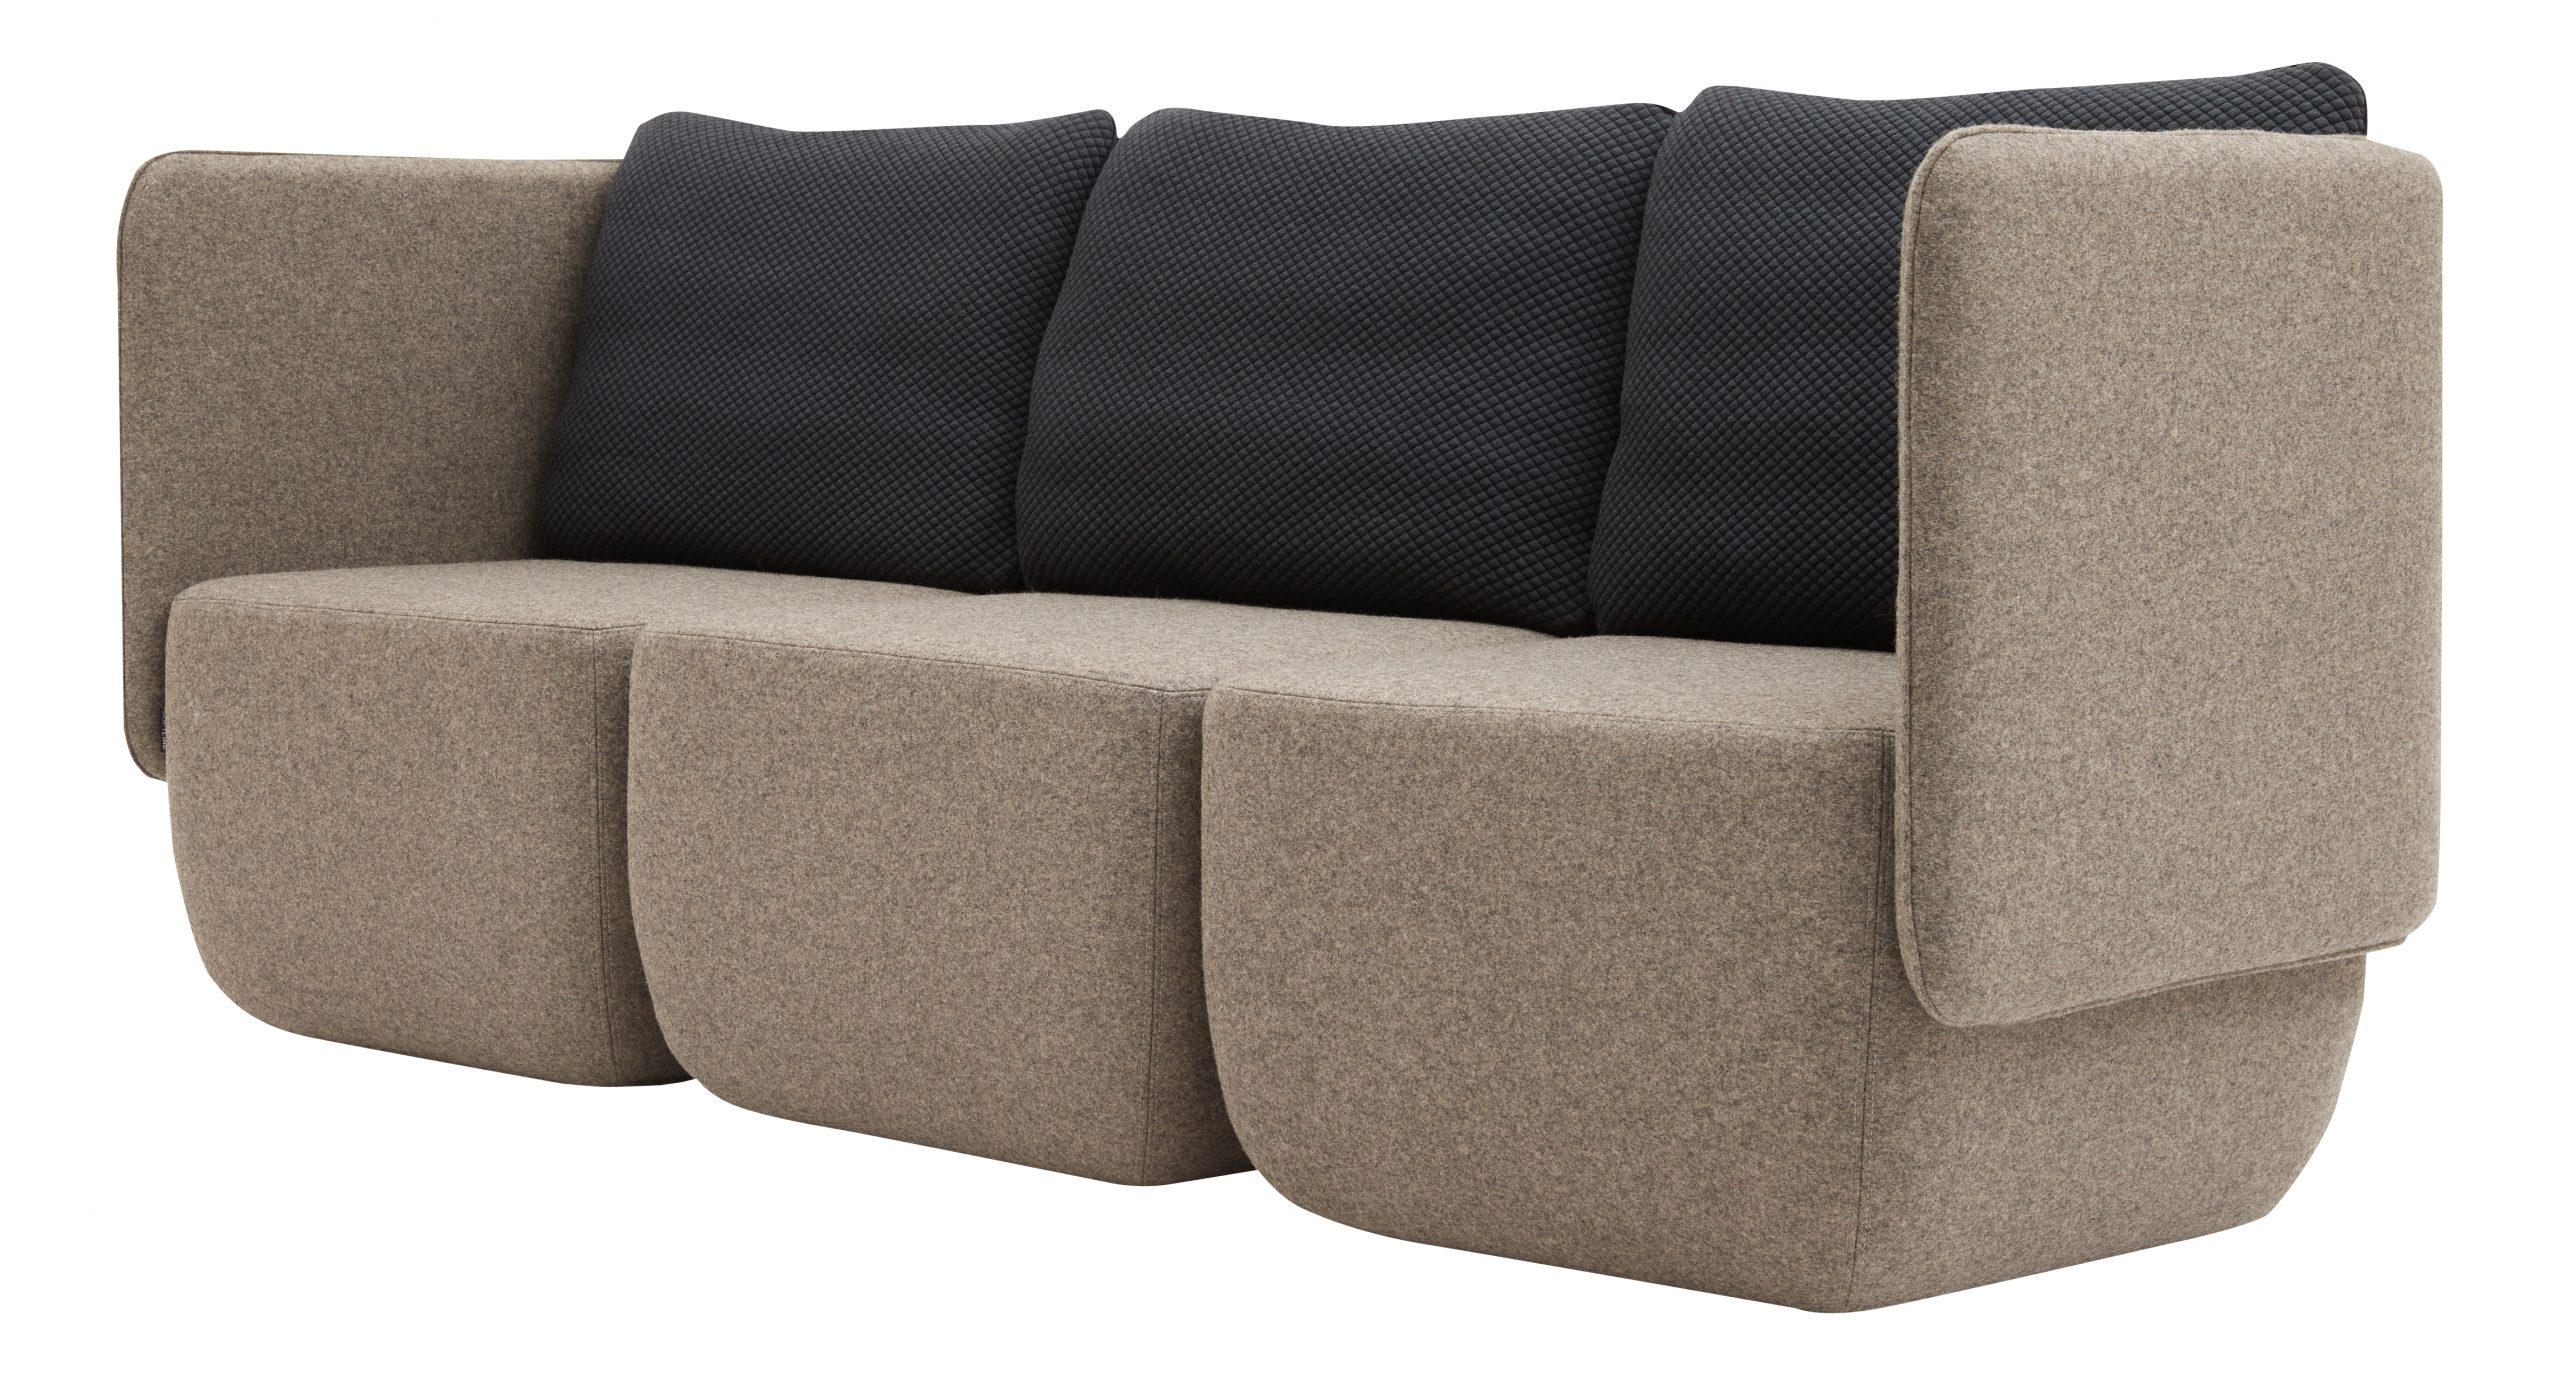 opera-modular-sofa-high-res-12-scaled.jpg